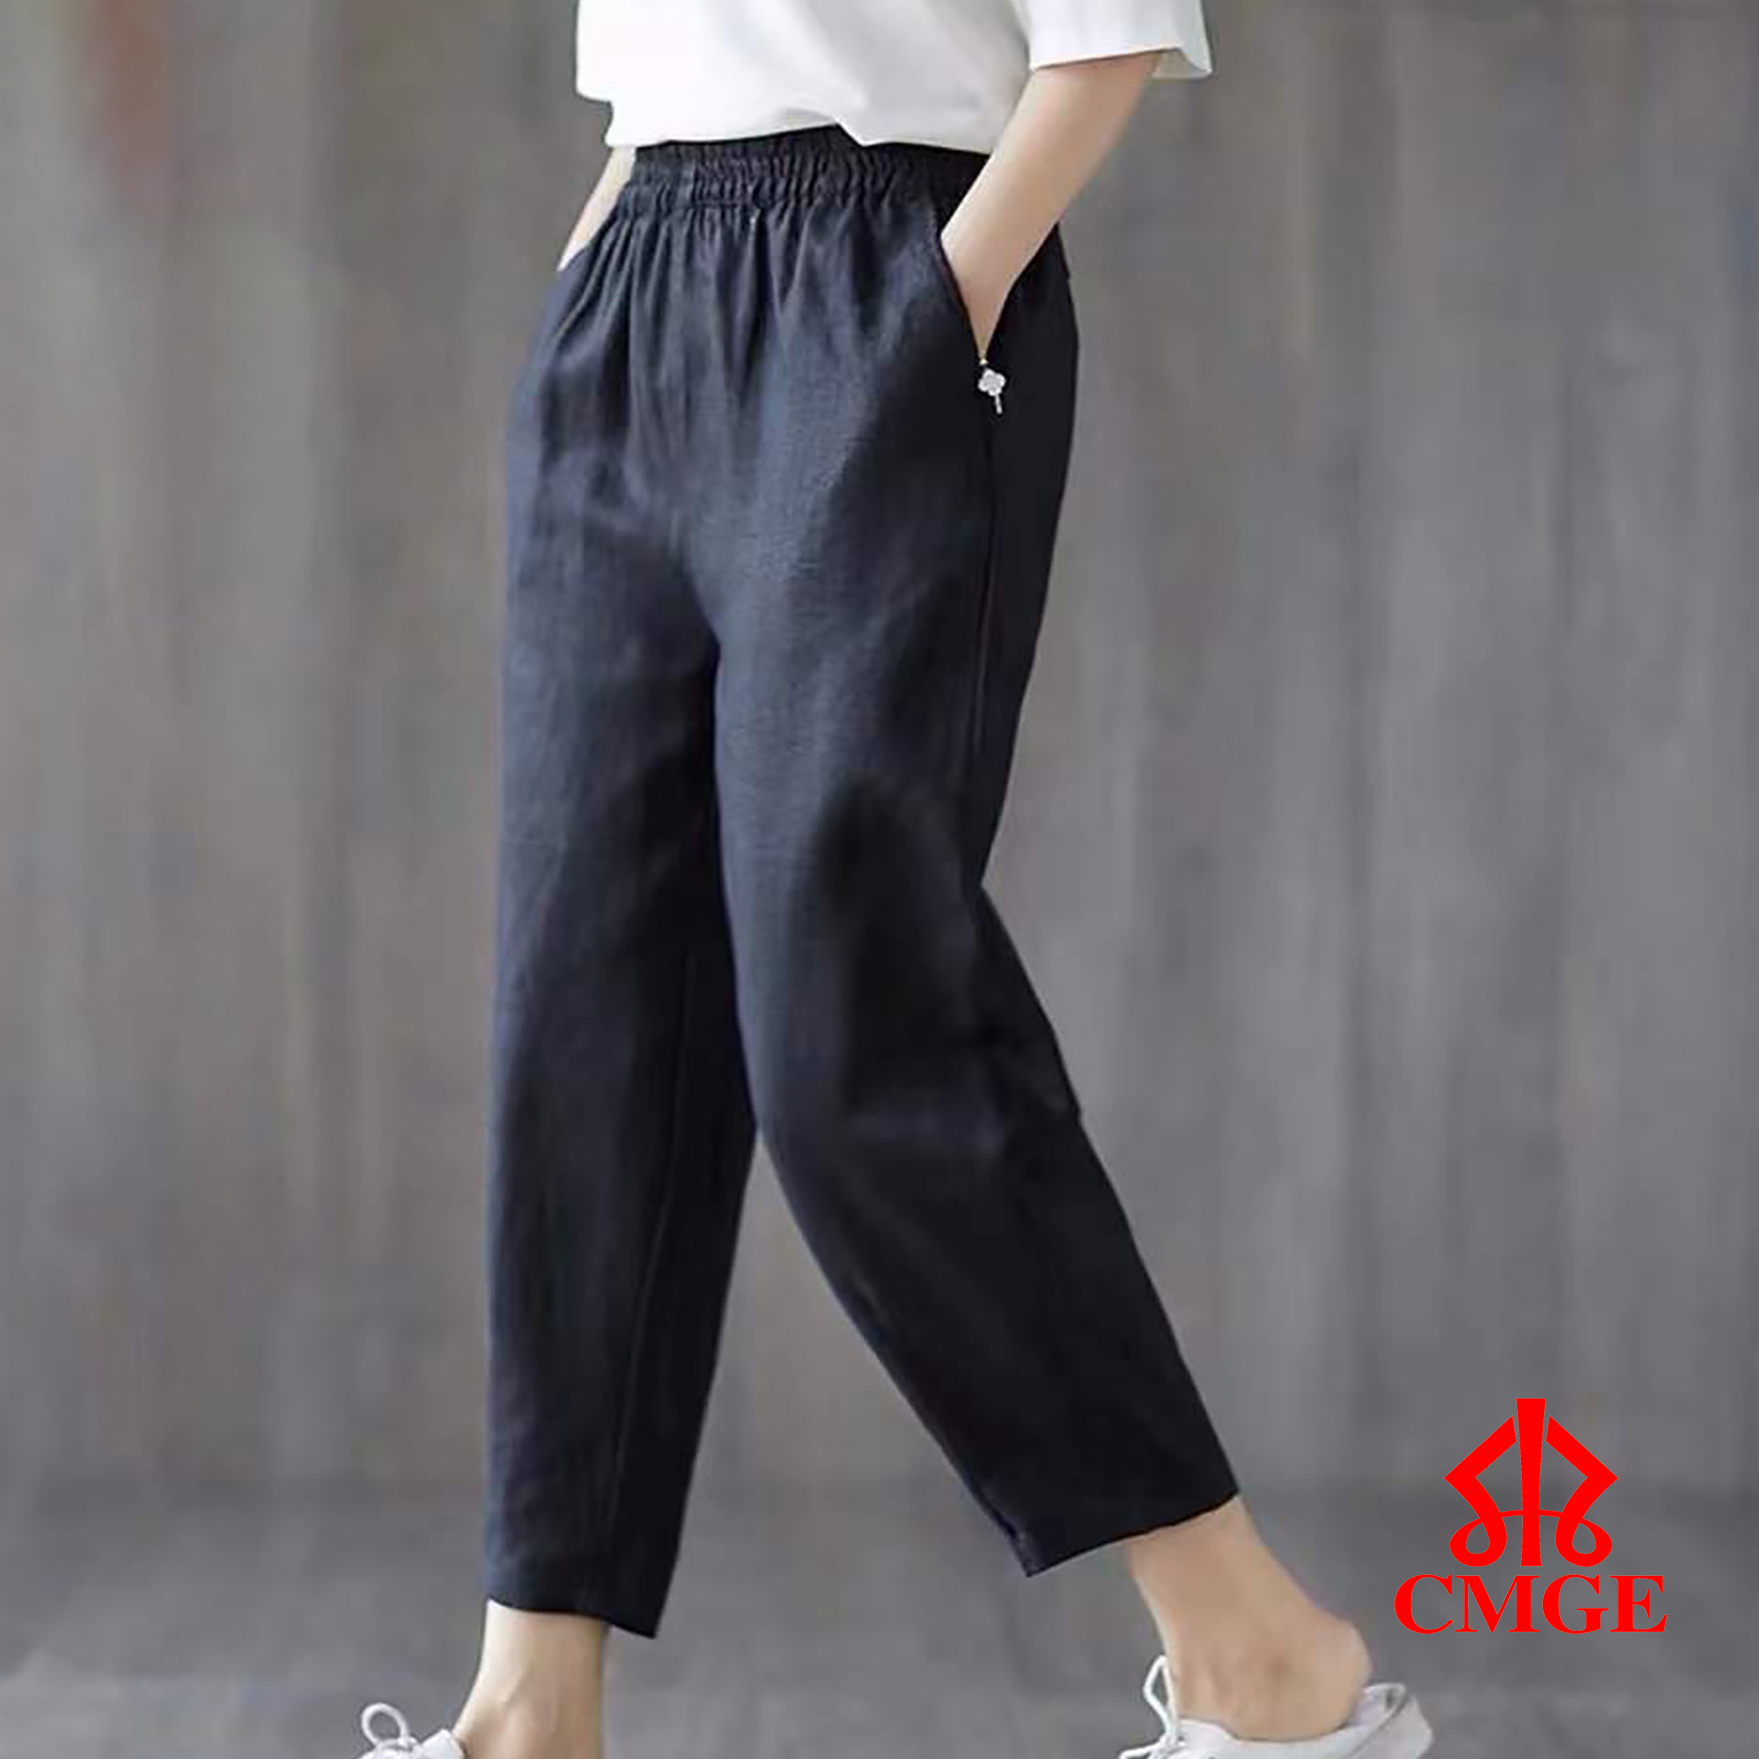 Buy Linen Pants For Women Plus Size online